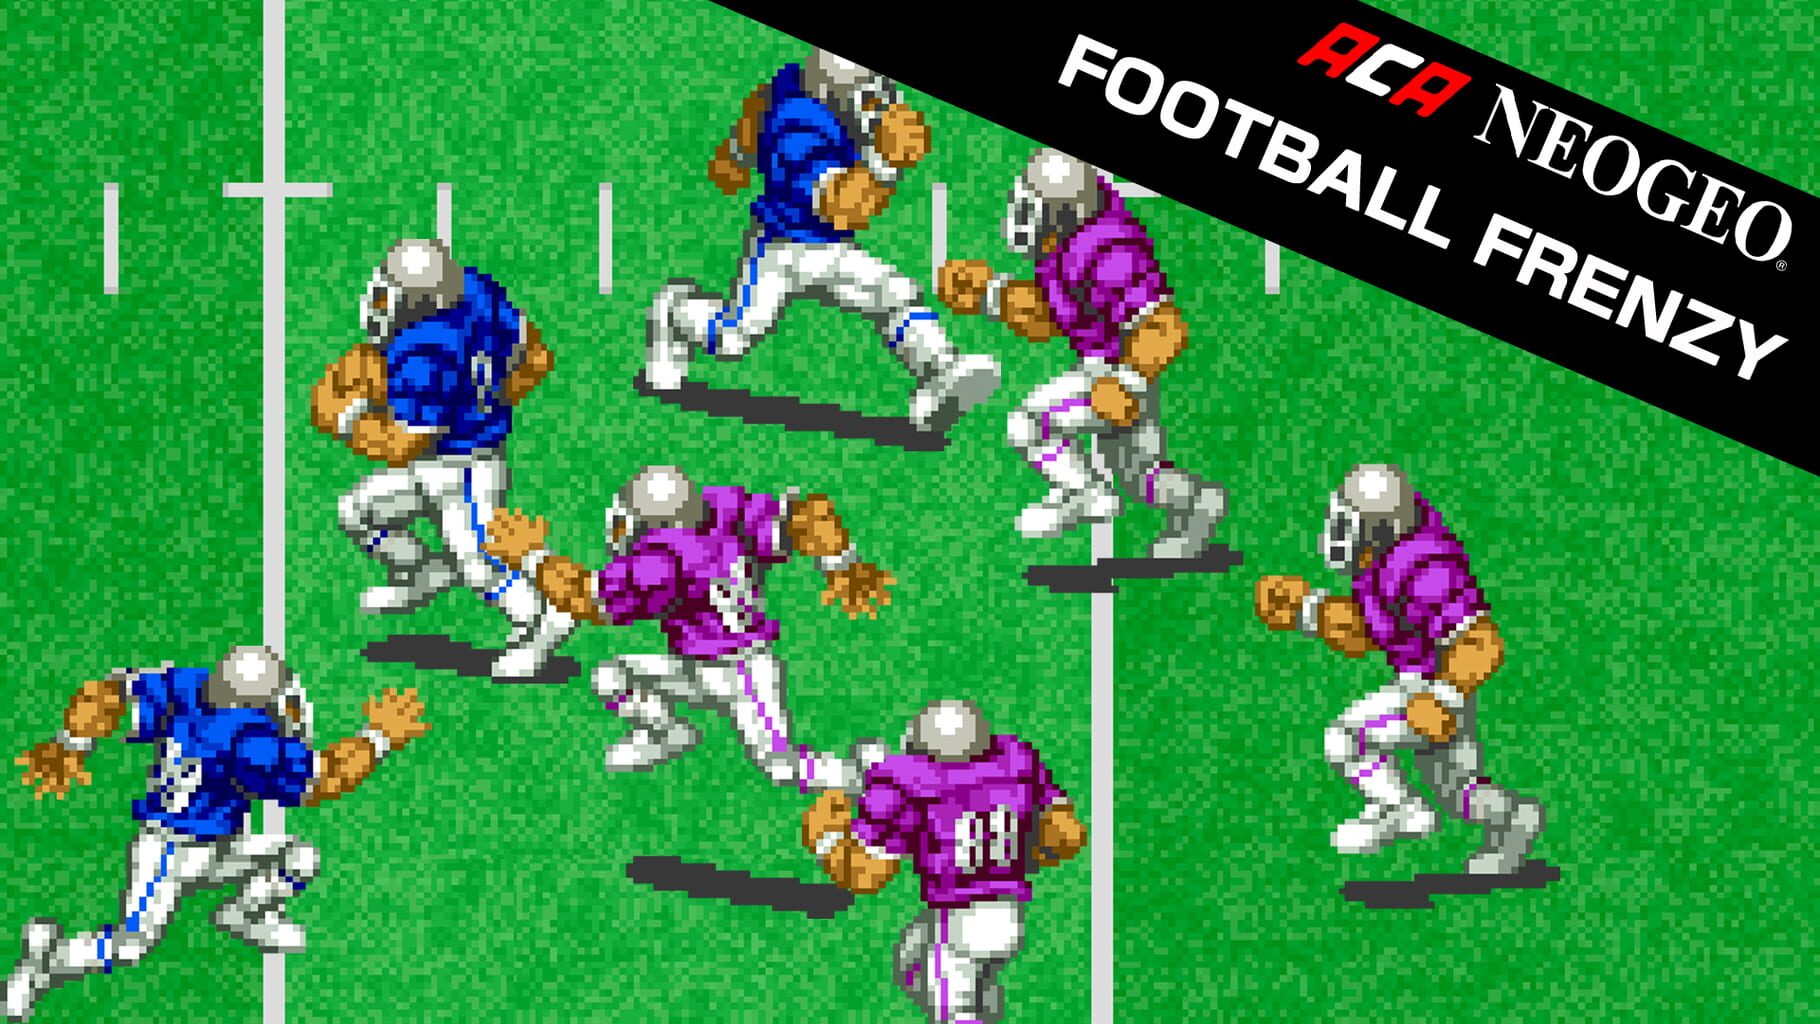 ACA Neo Geo: Football frenzy artwork